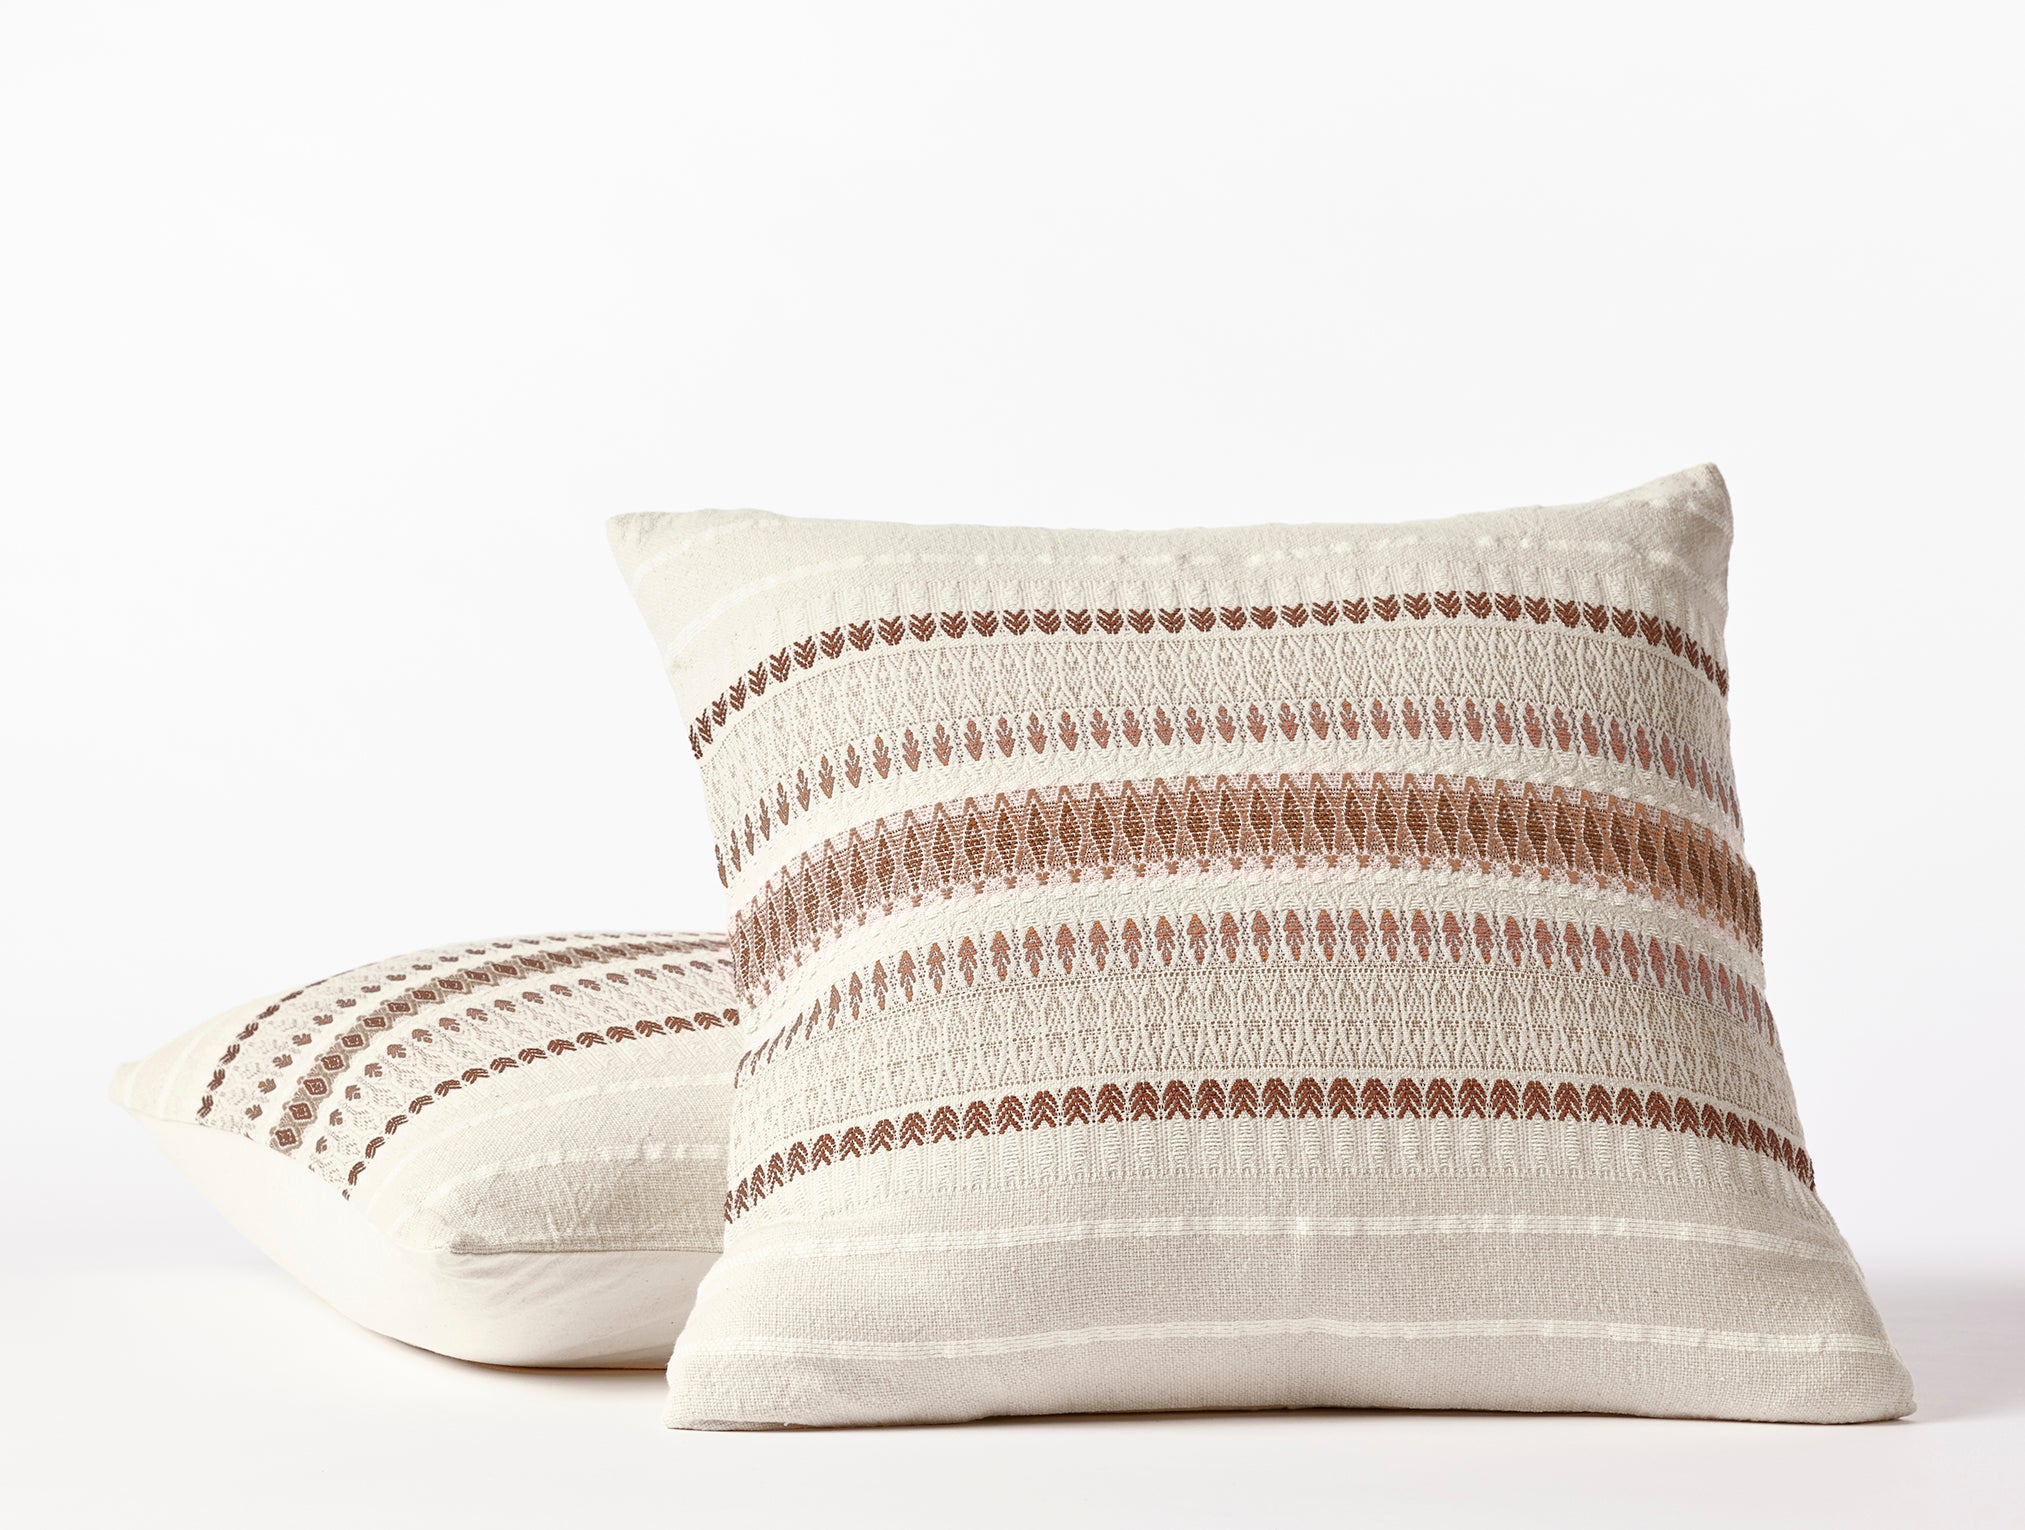 Throw Pillows & Decorative Pillows